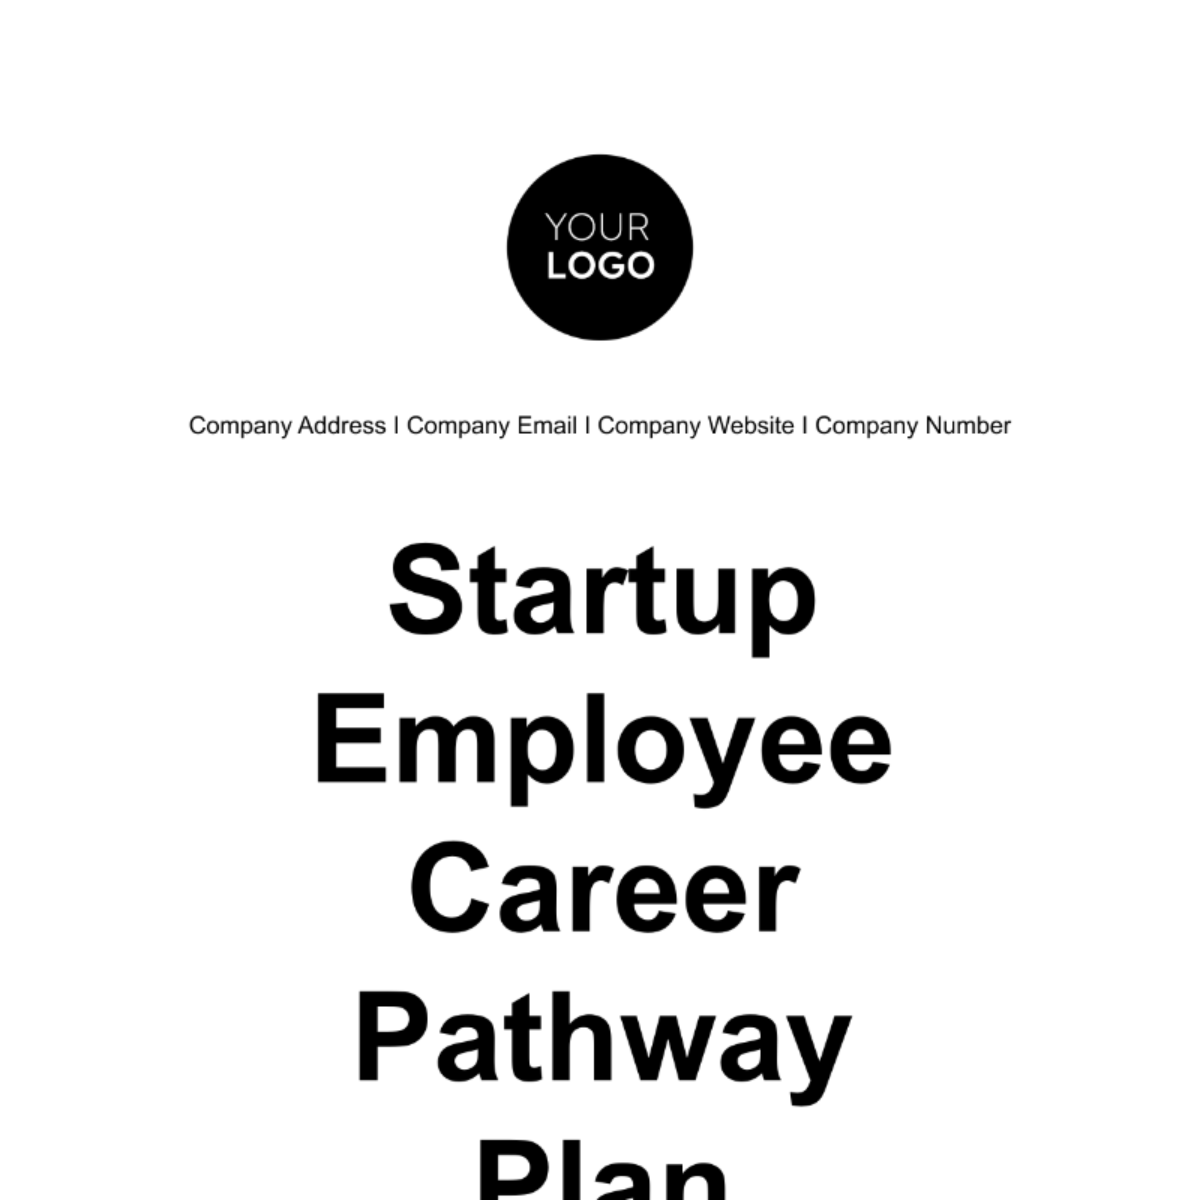 Startup Employee Career Pathway Plan Template